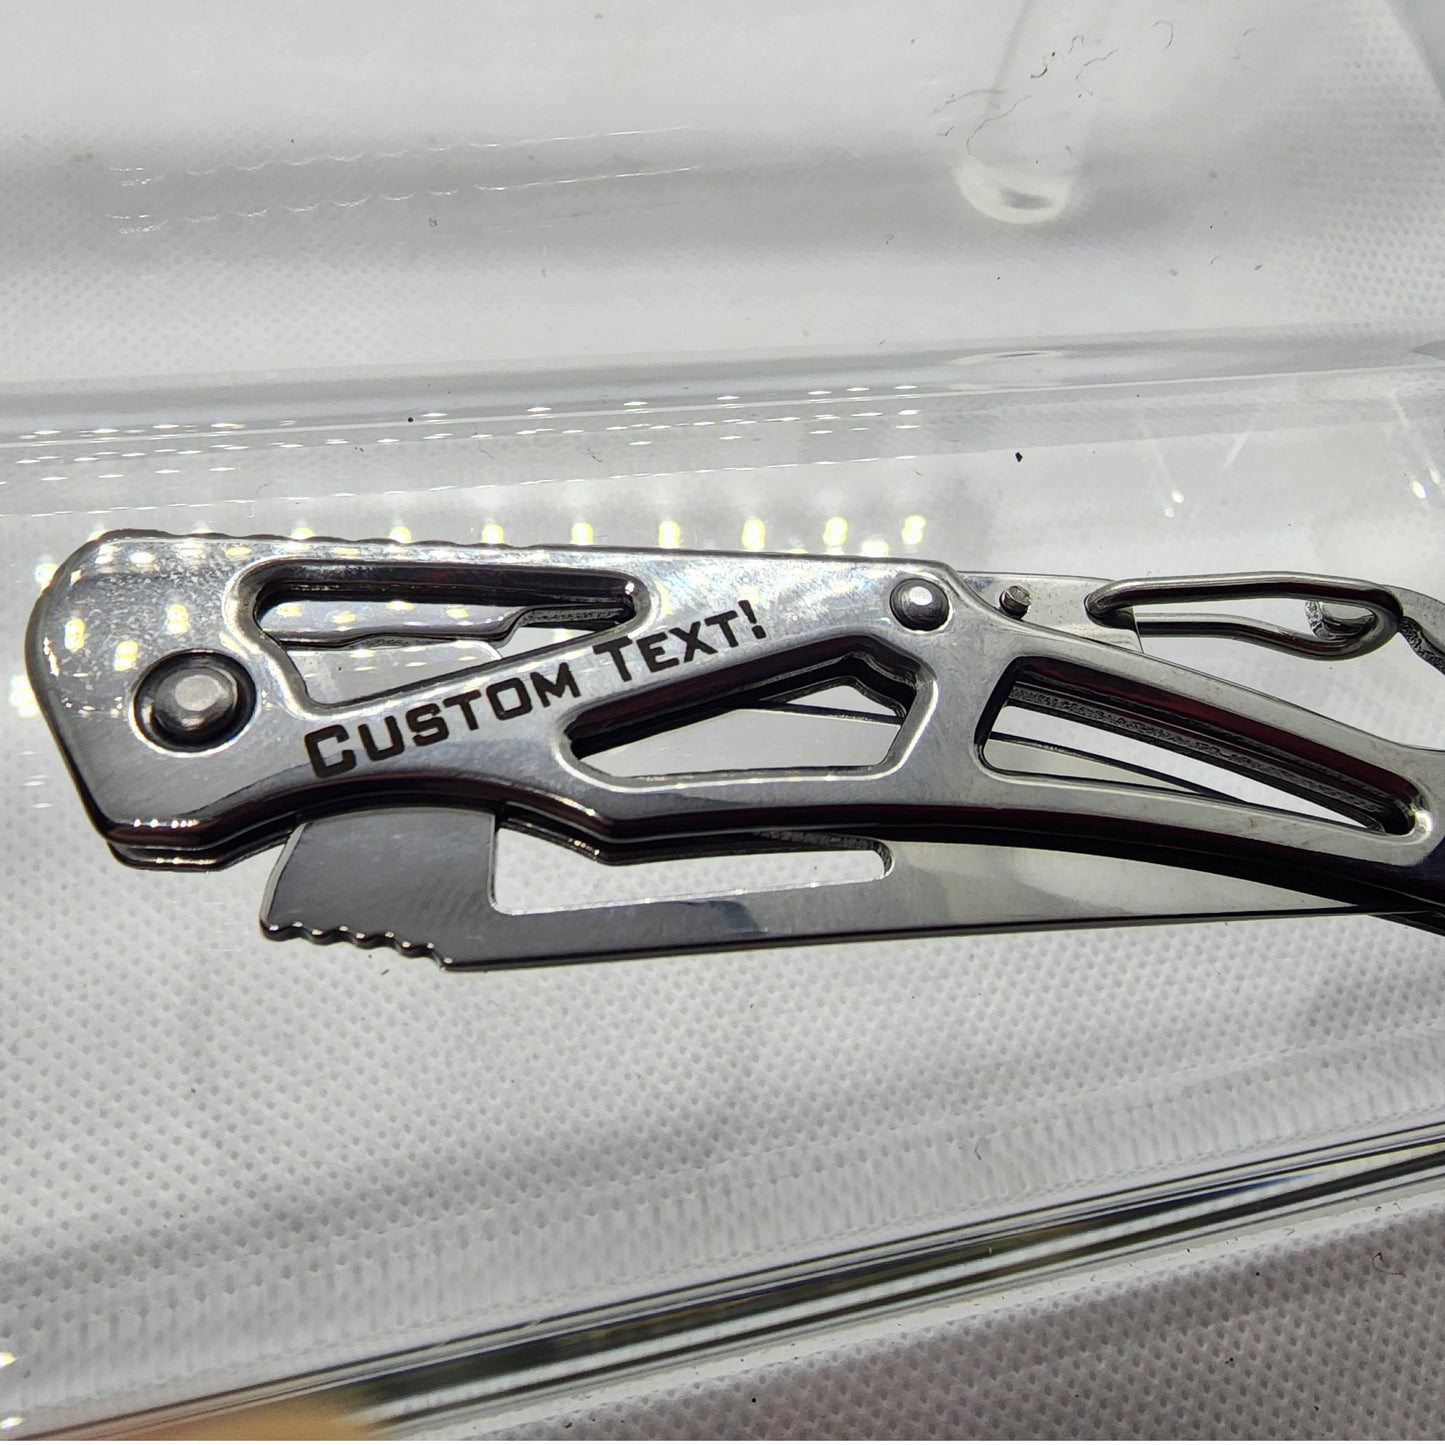 Custom Engraved Keychain Knife